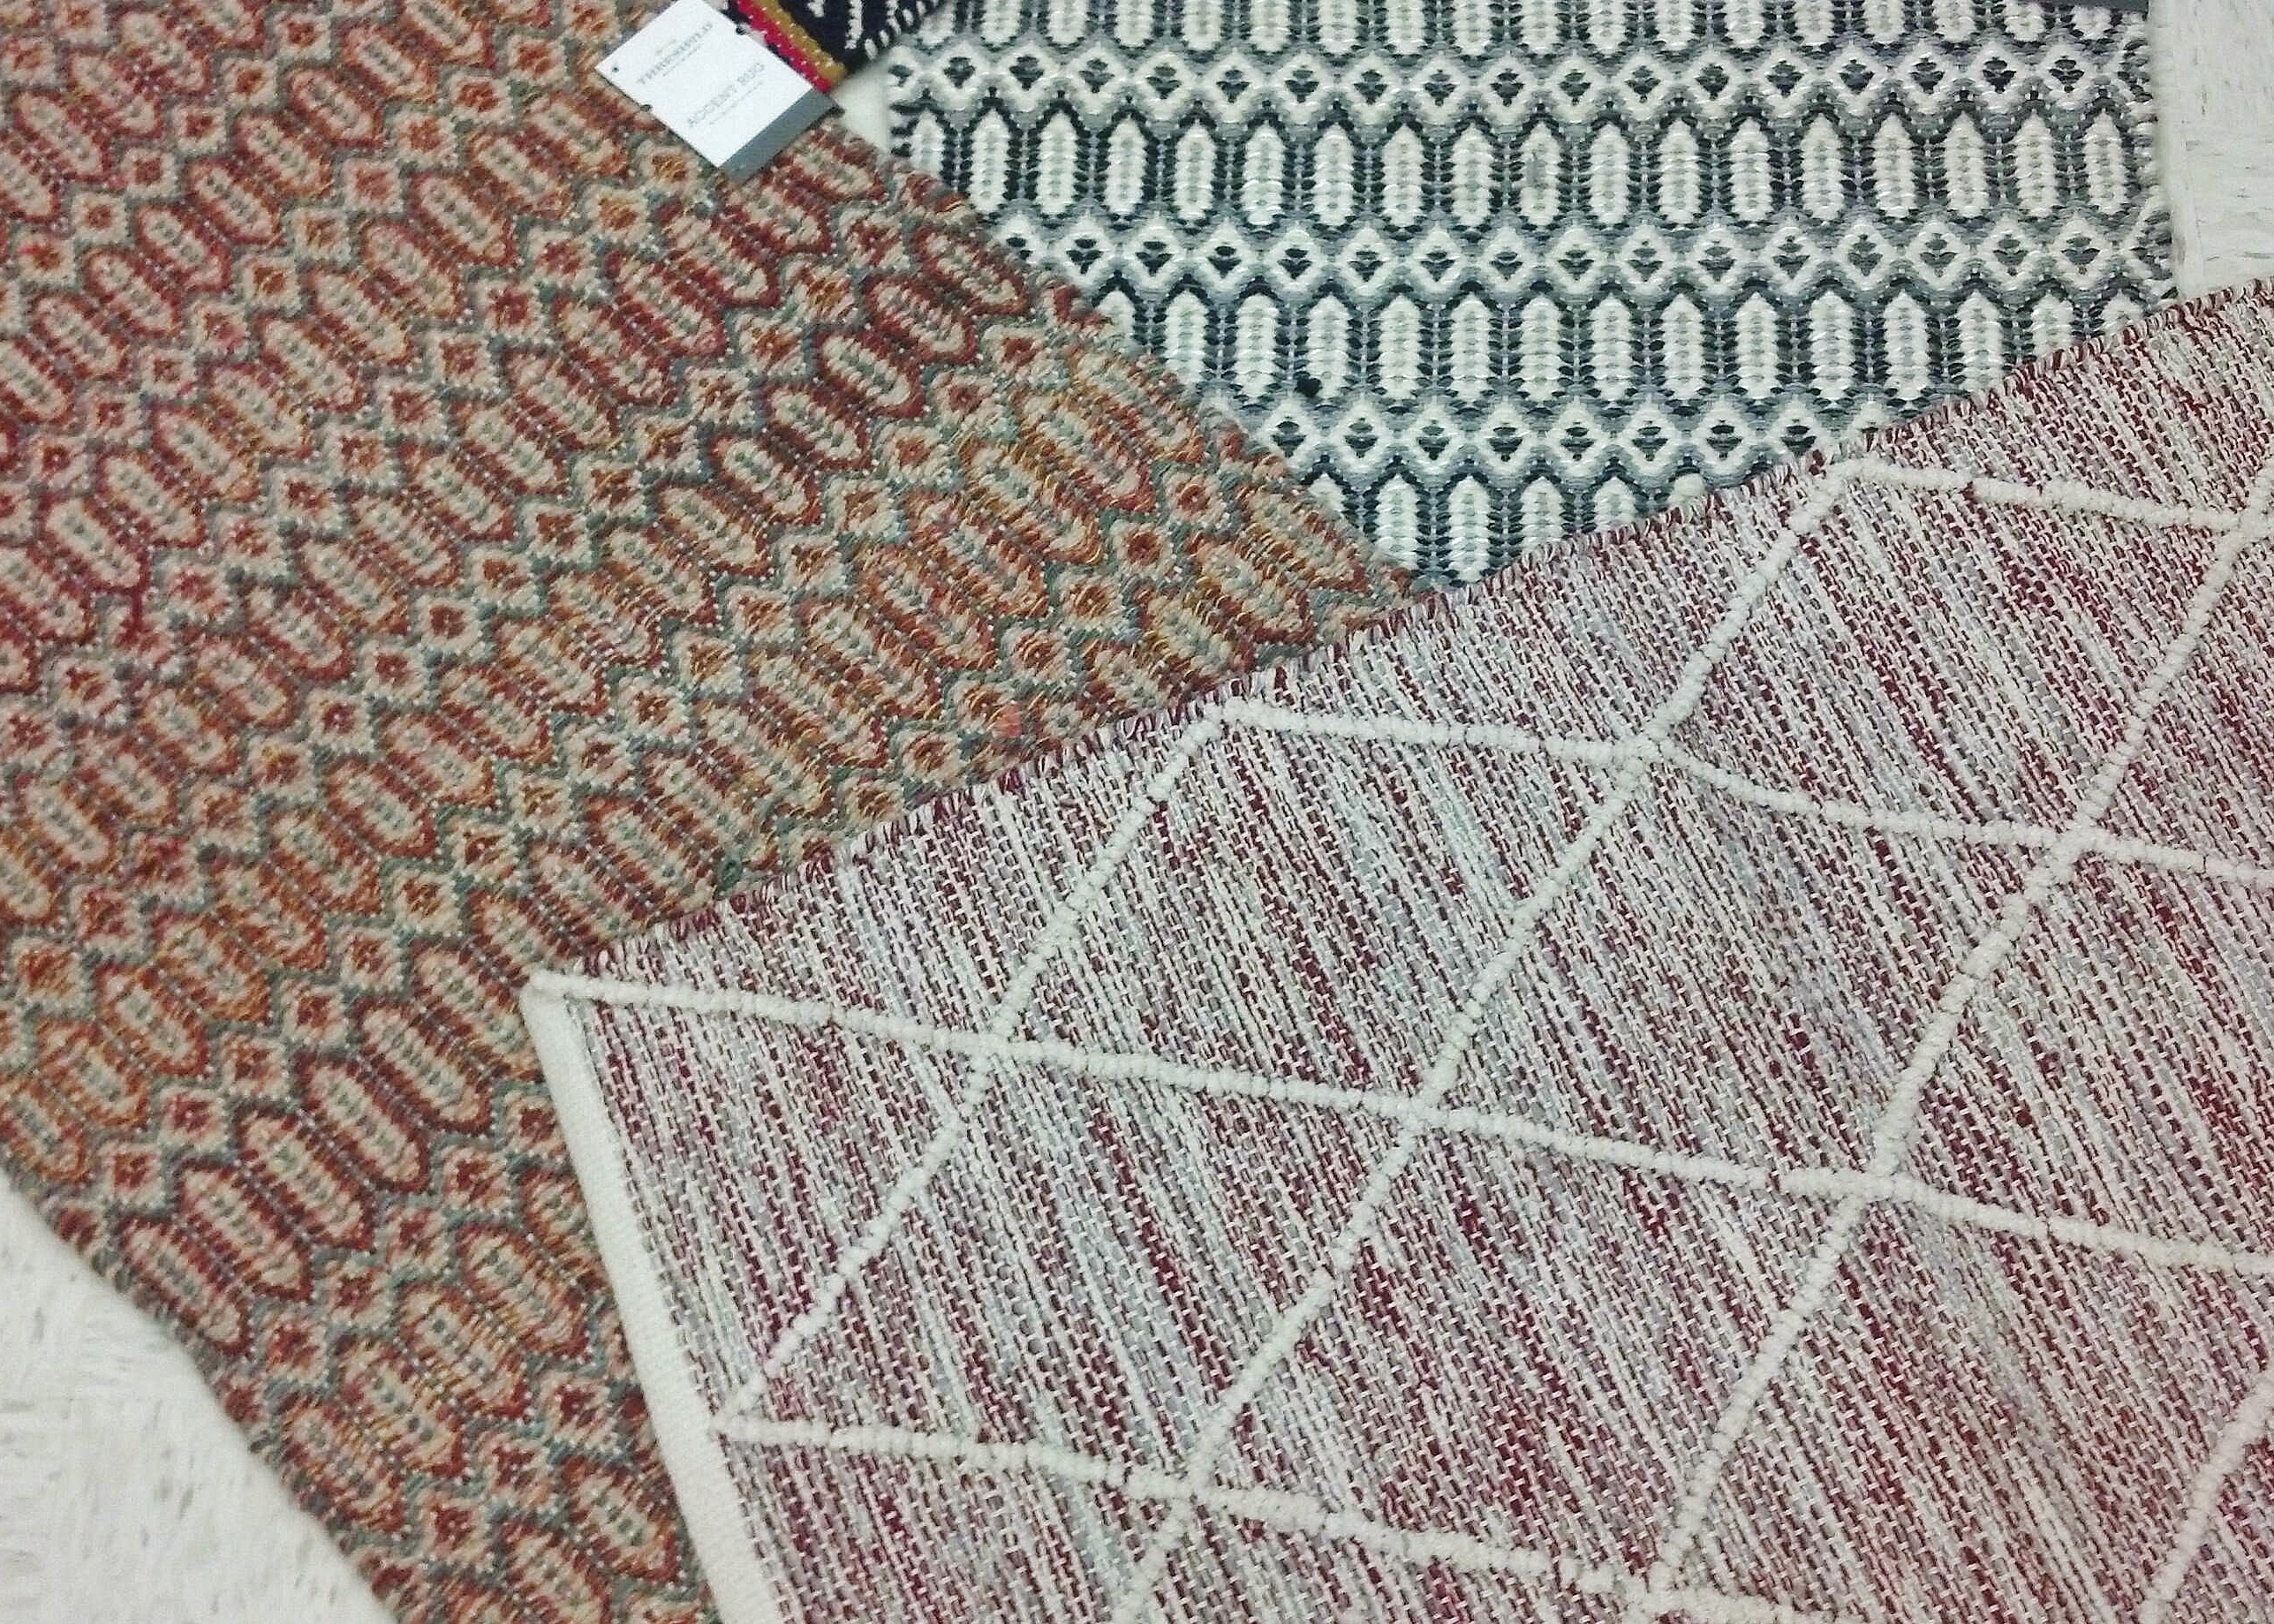 more-rugs-at-target